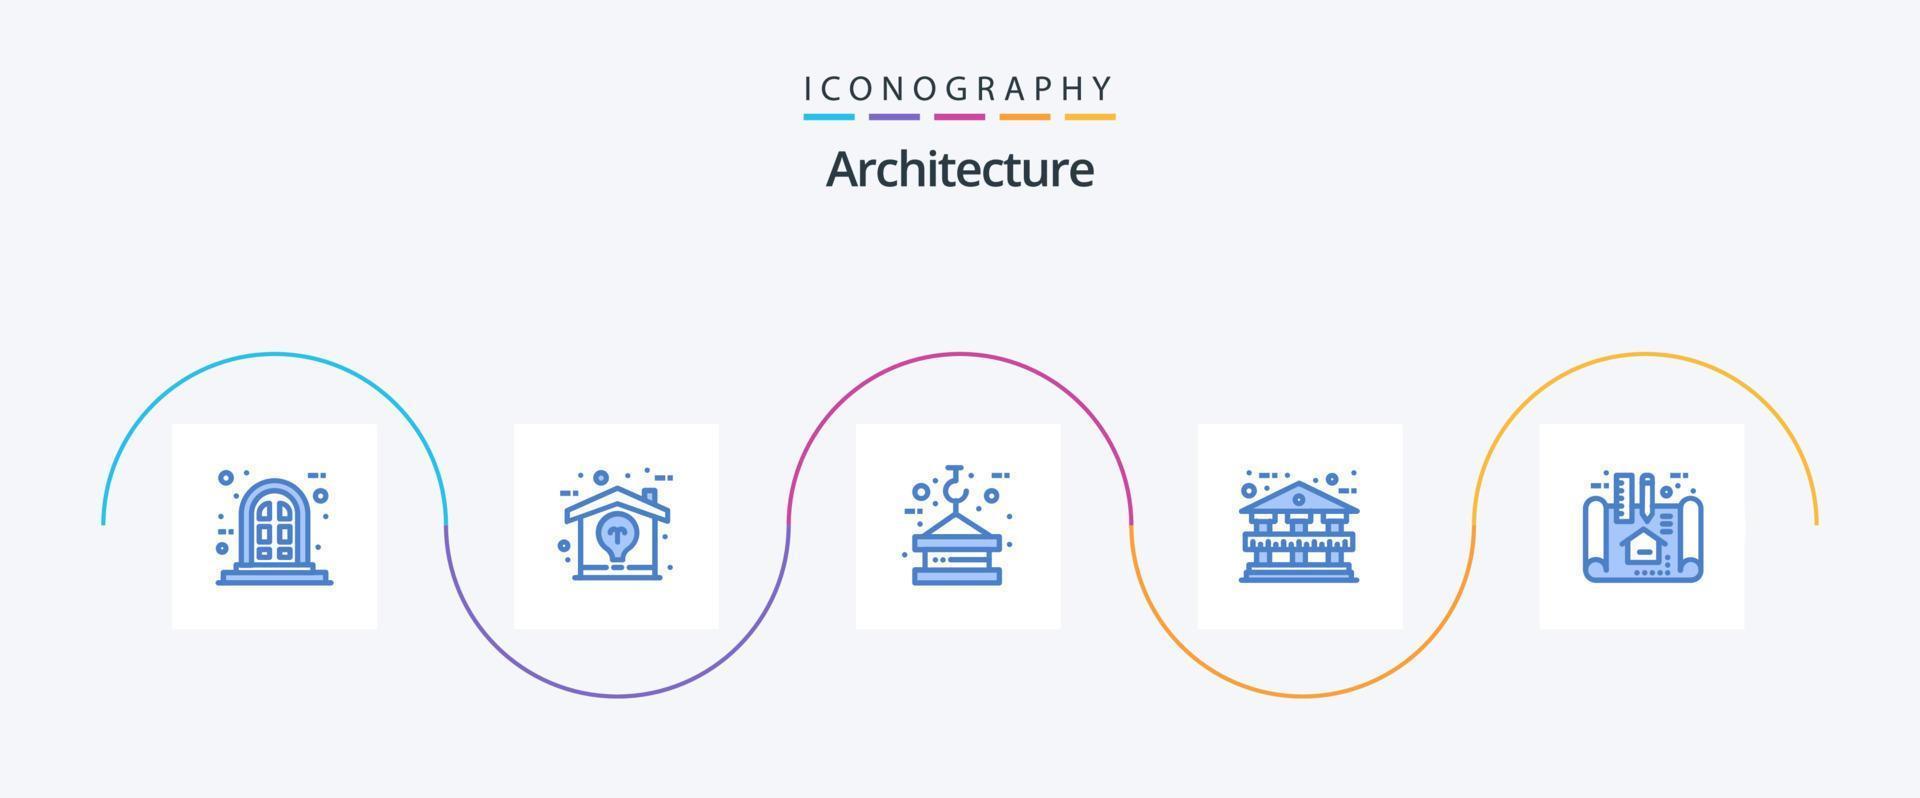 arkitektur blå 5 ikon packa Inklusive planen. lägenhet. krok. Bank byggnad. arkitektur vektor